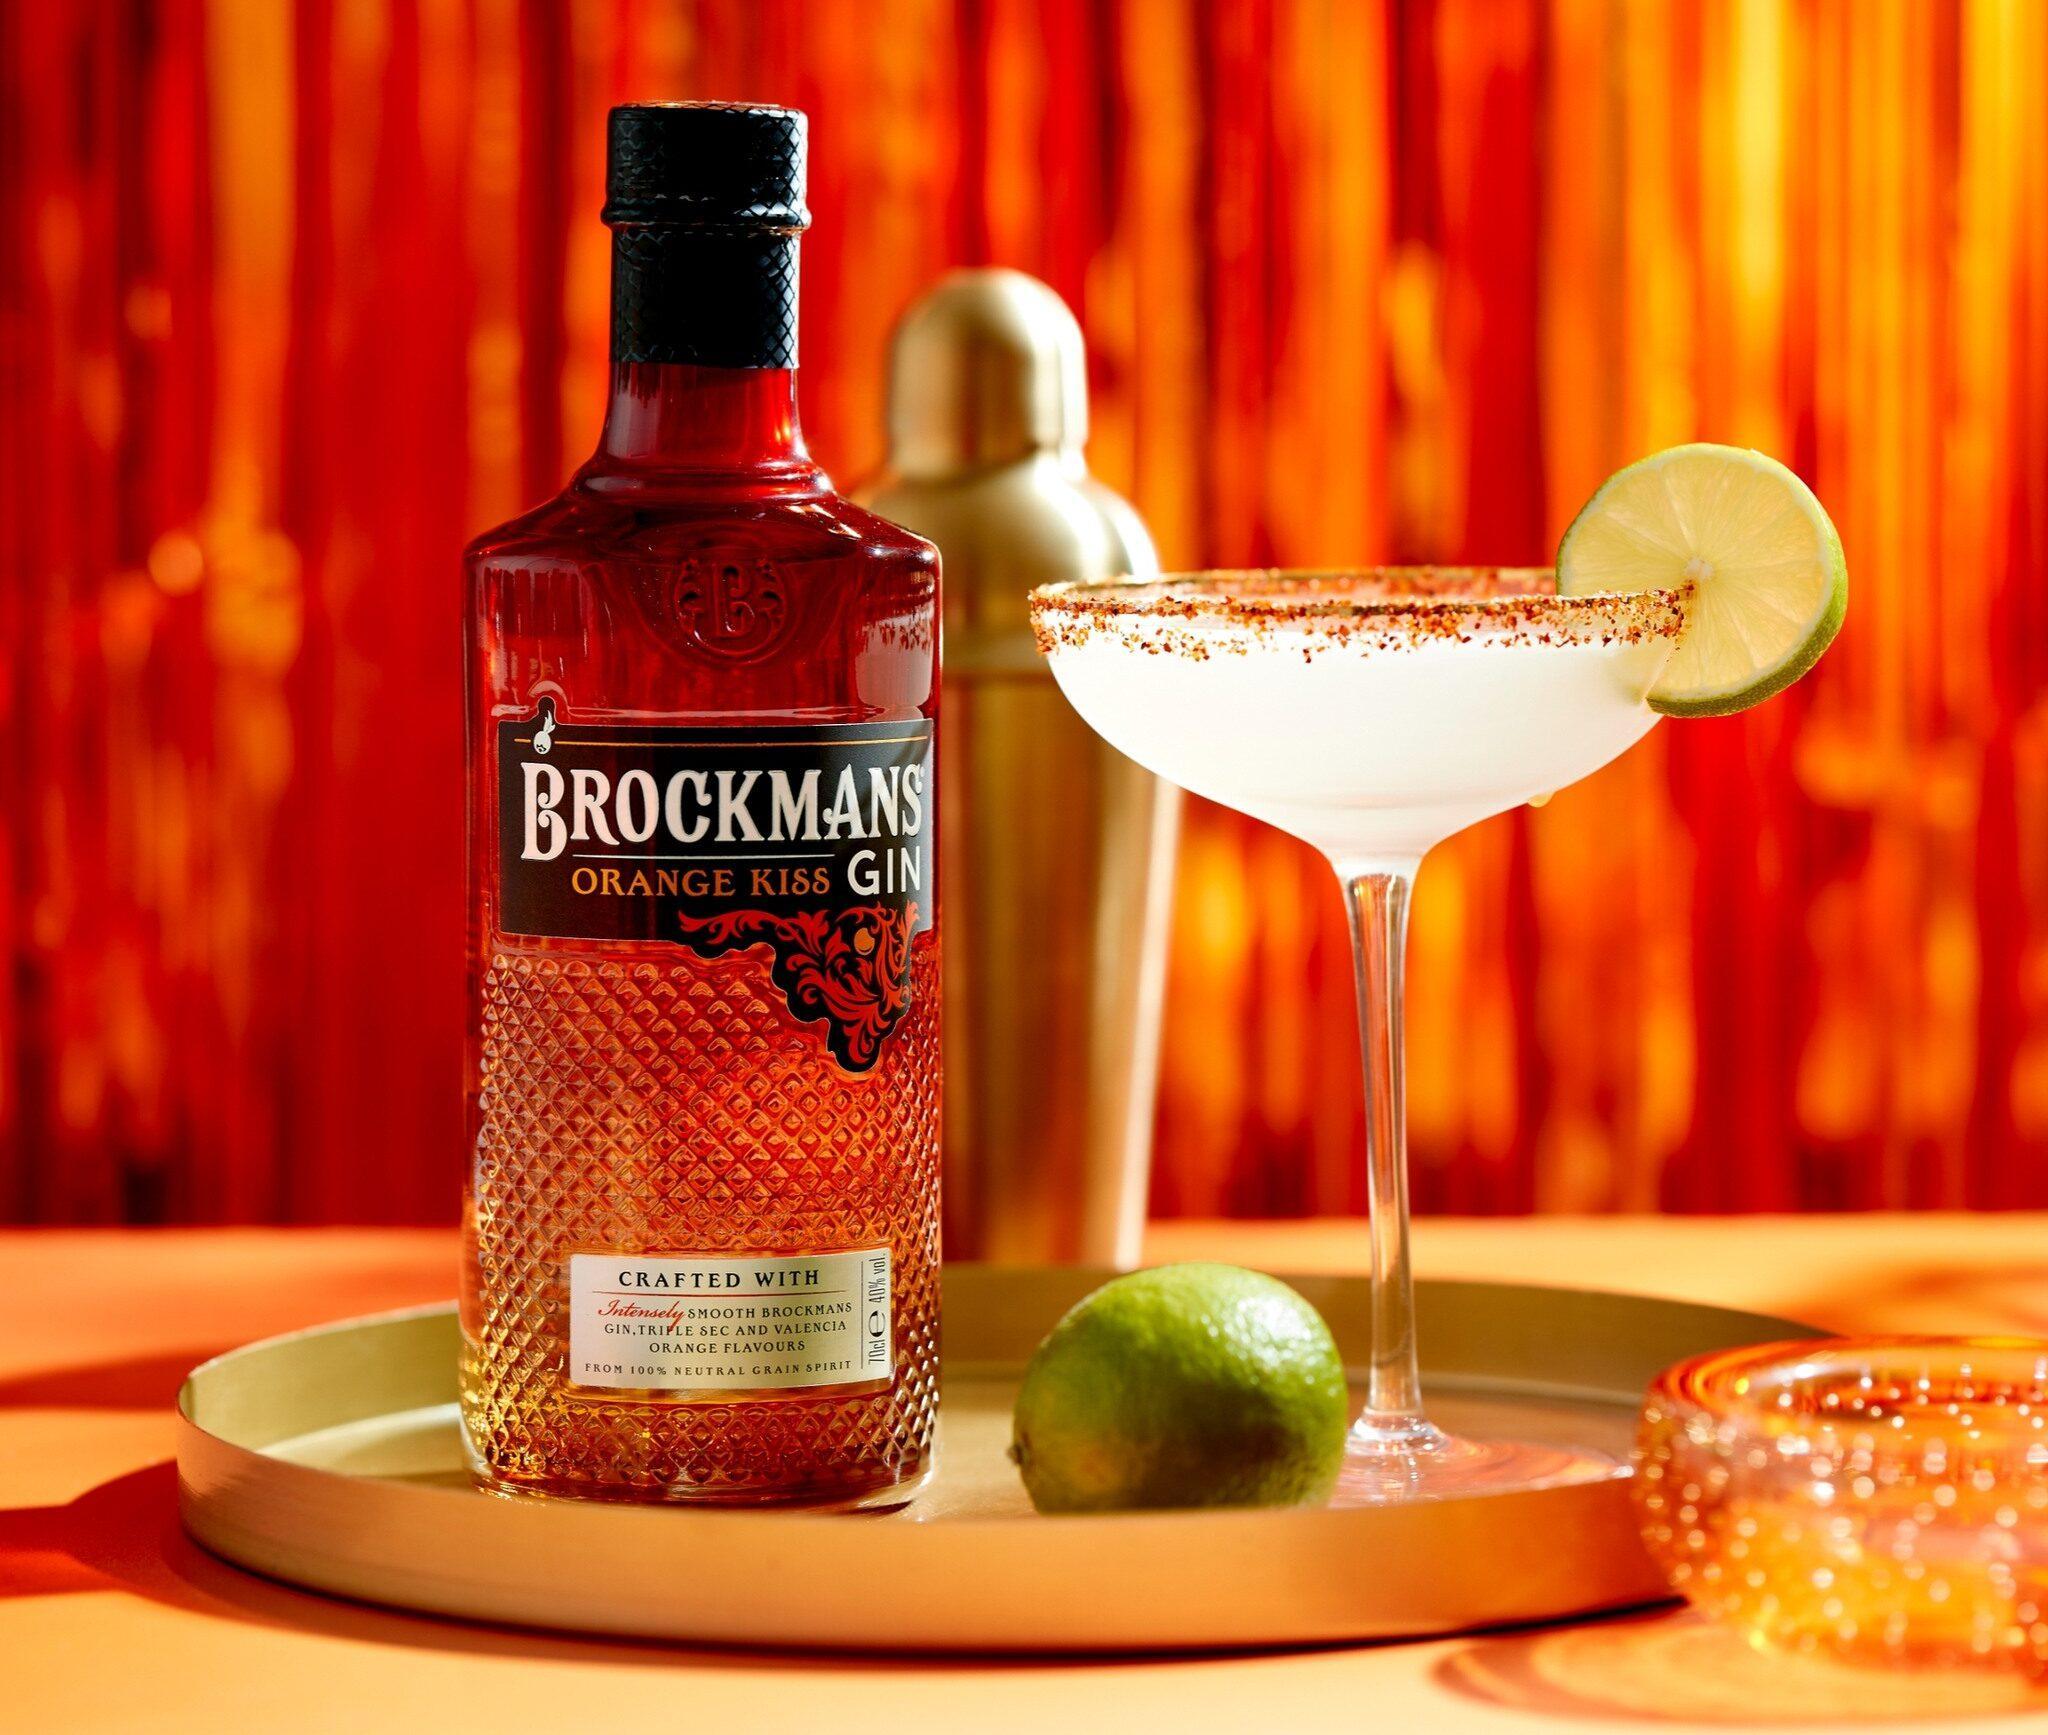 brockmans brockmans gin orange kiss 70 cl con 2 bottiglie indian tonic j. gasco